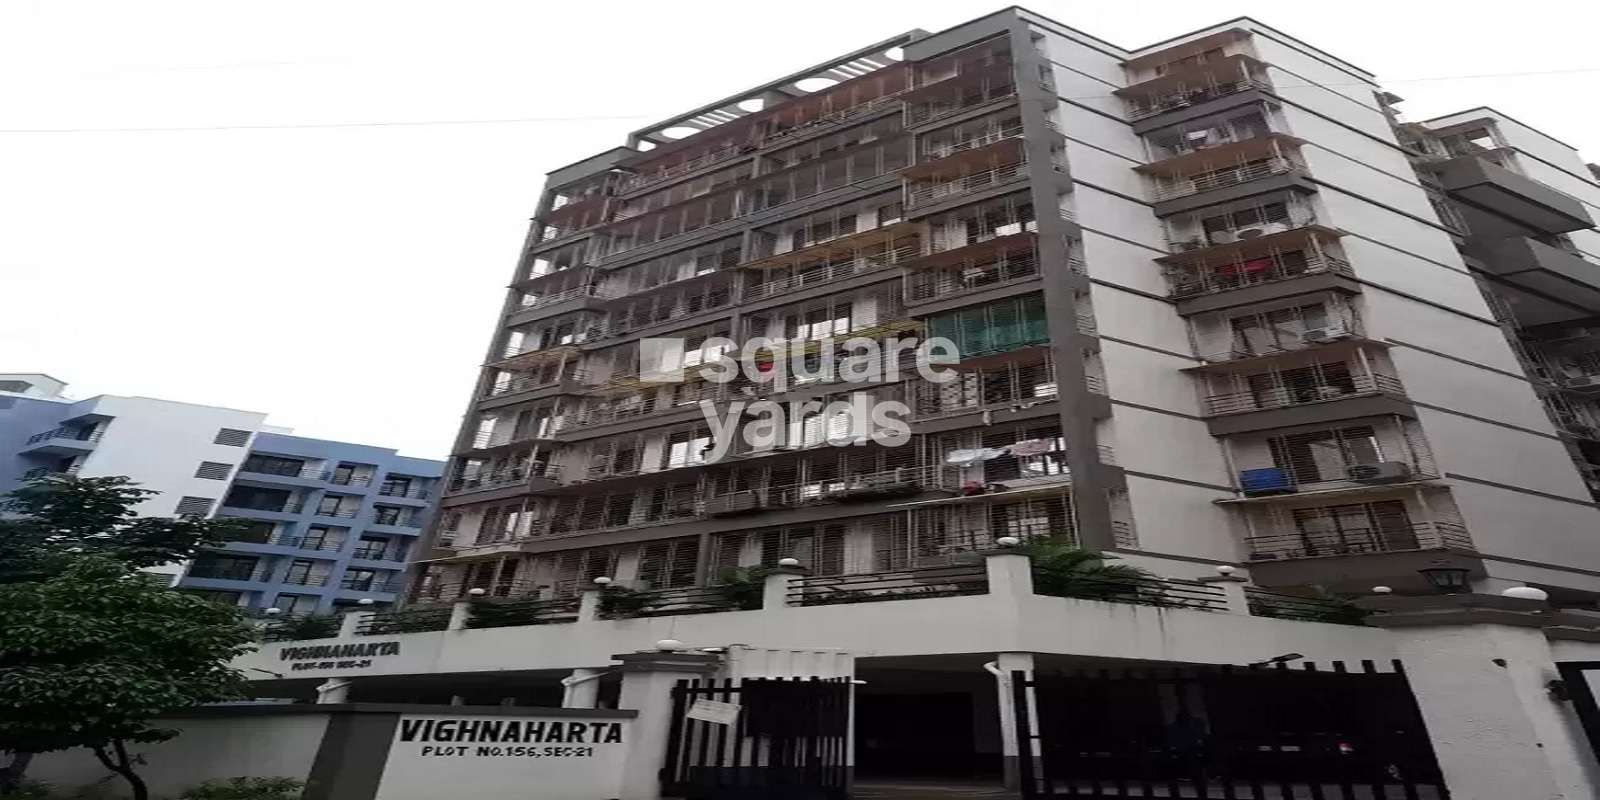 Vighnaharta Complex Kharghar Cover Image